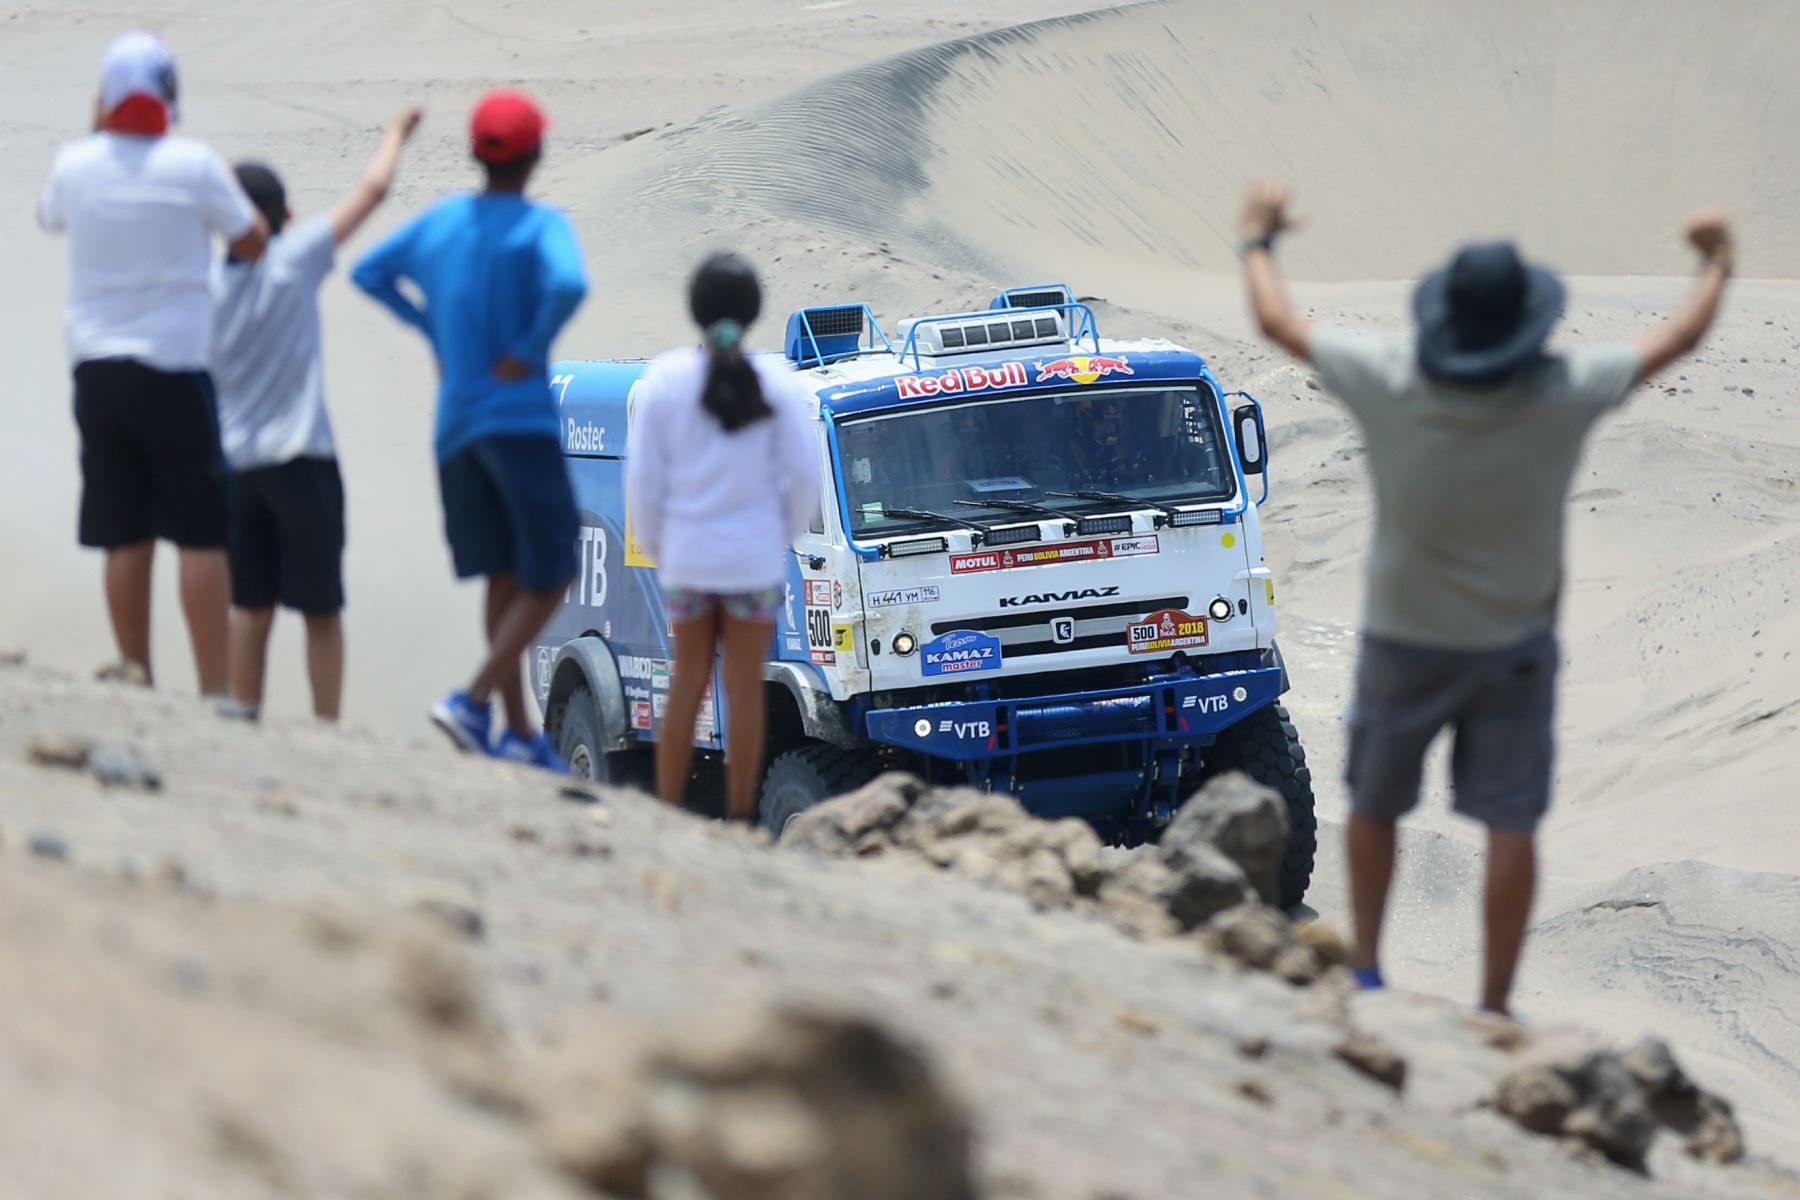 Arequipa espera hoy arribo de pilotos del "rally" Dakar 2018. Foto :ANDINA/Luis Iparraguirre.